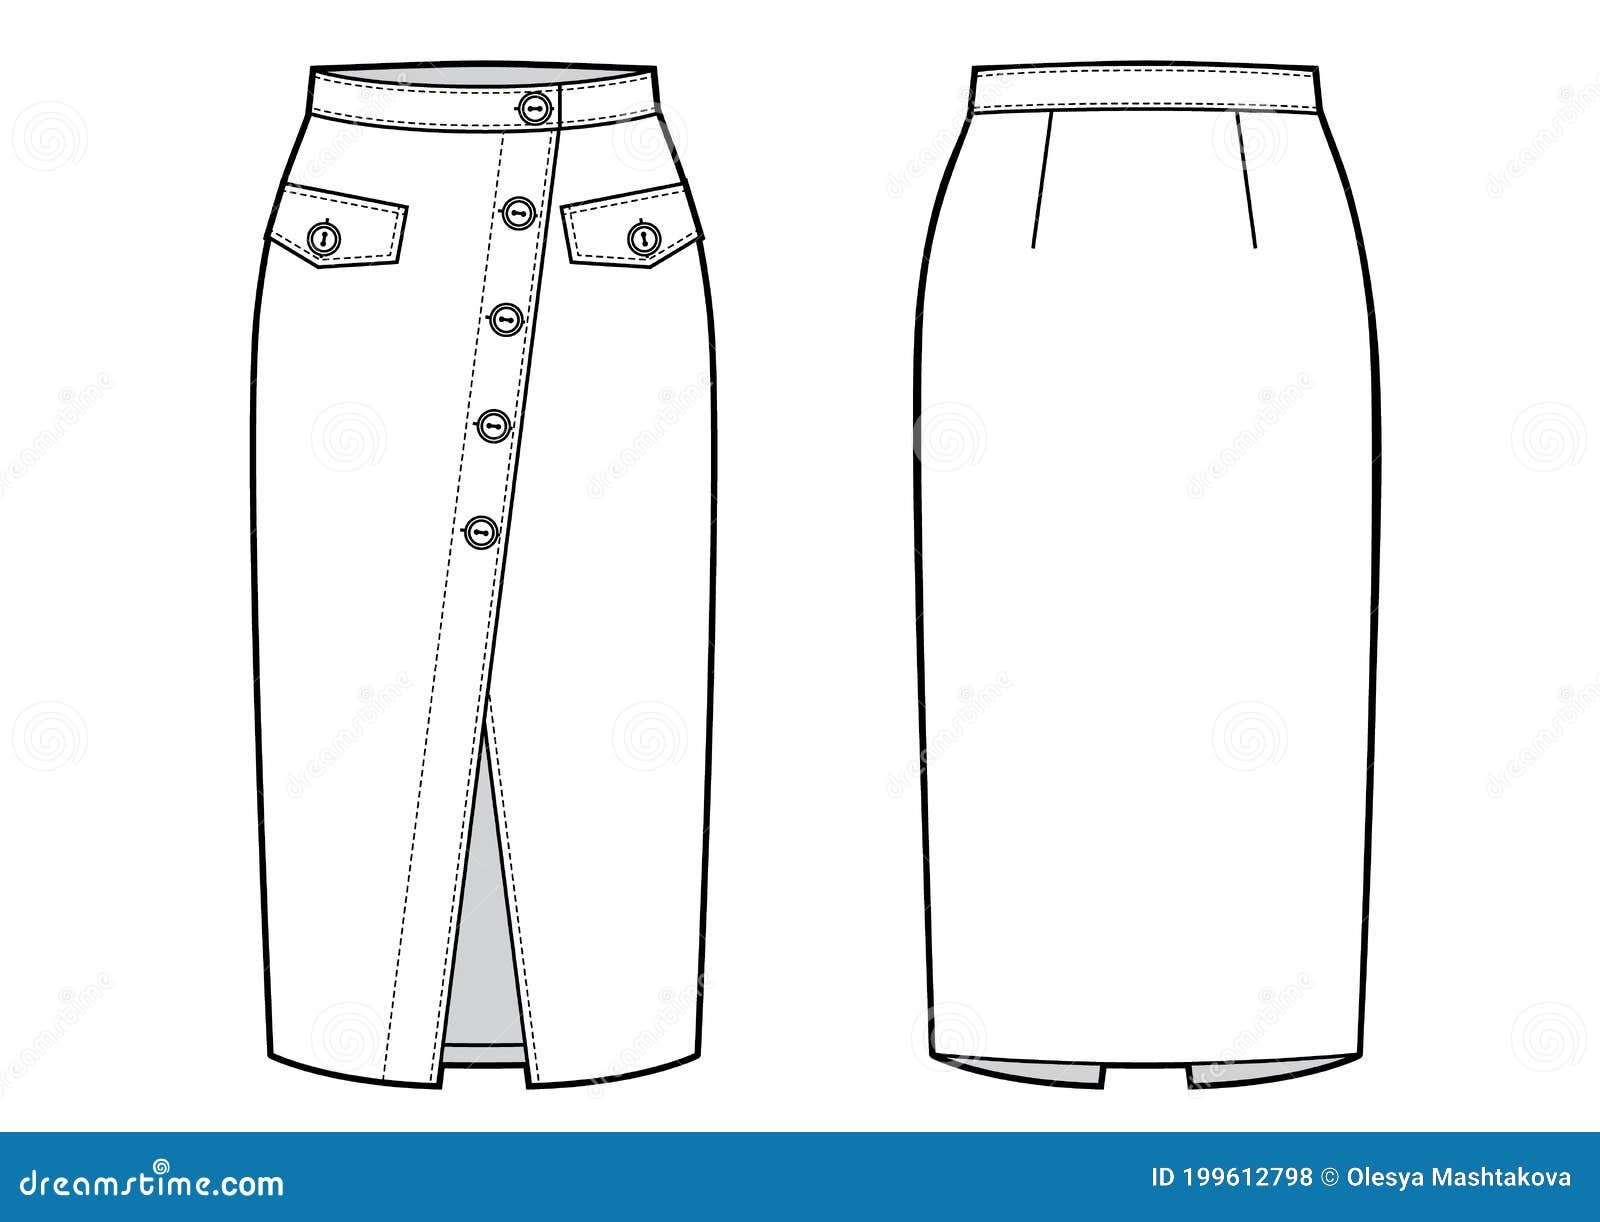 Share 83+ pencil skirt flat sketch latest - in.eteachers